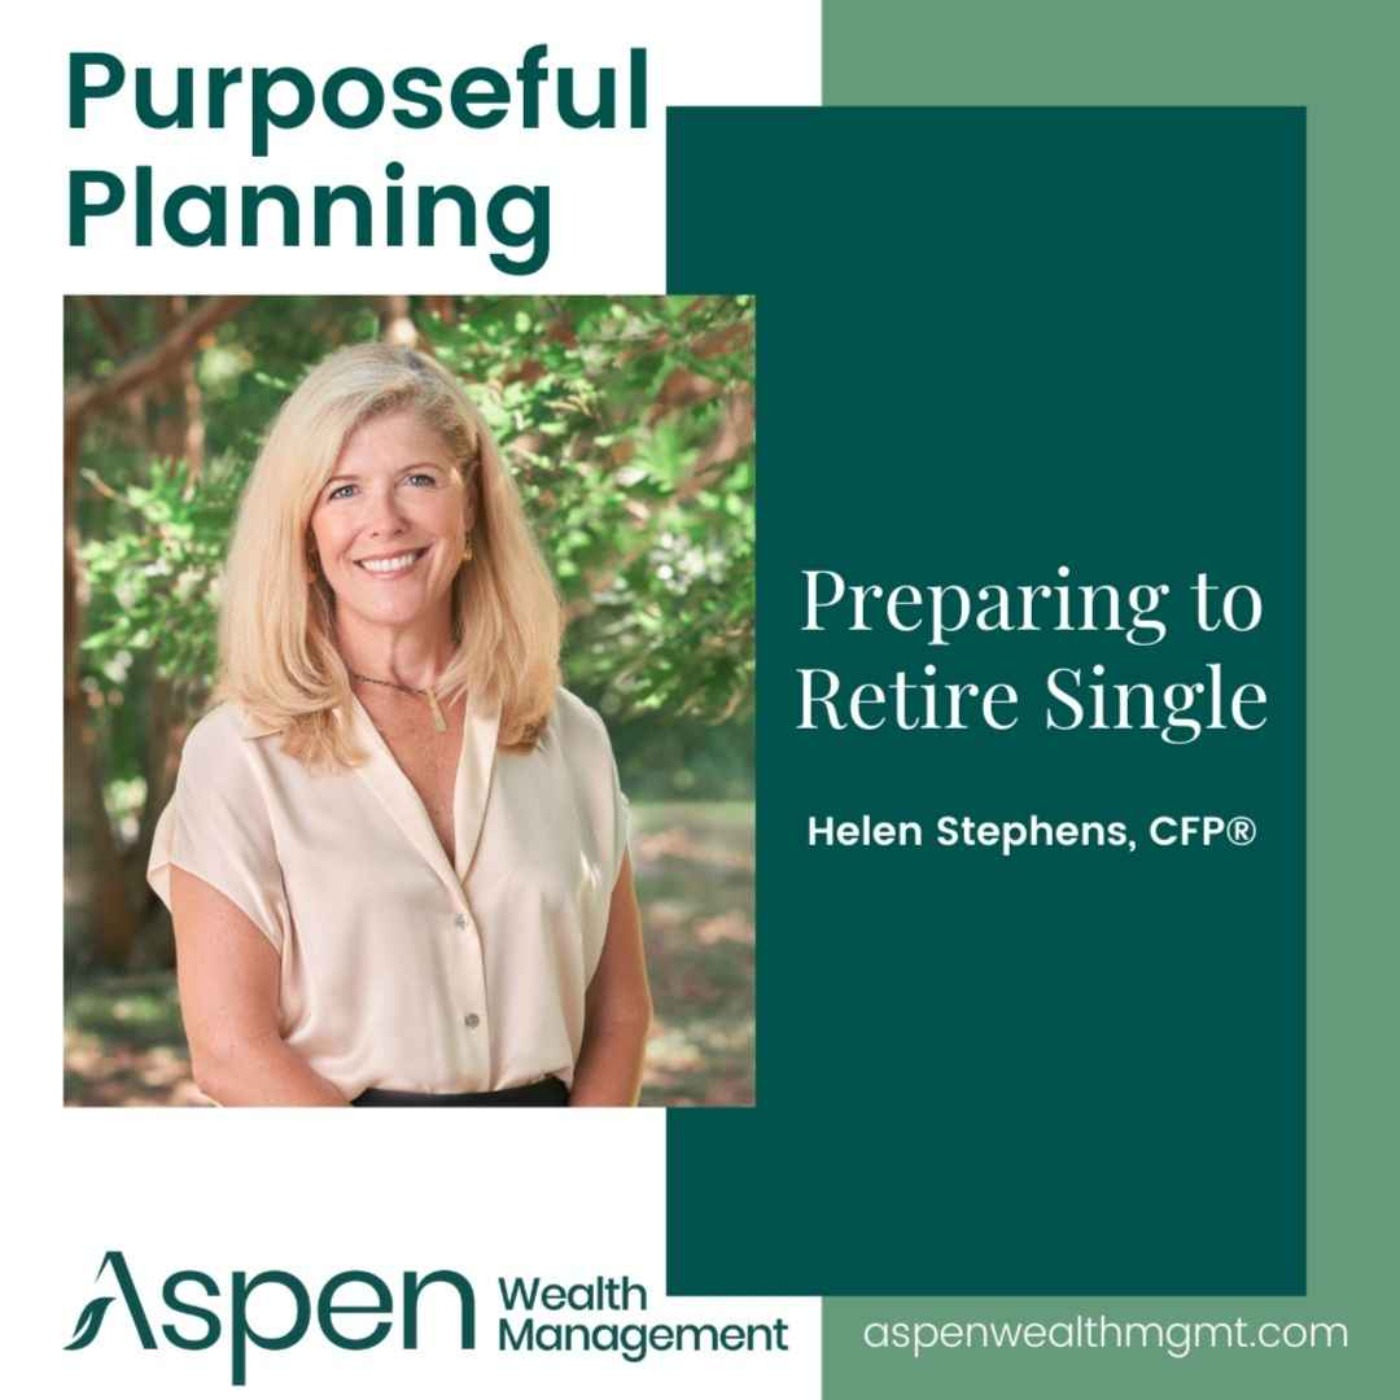 Preparing to Retire Single, Part 1